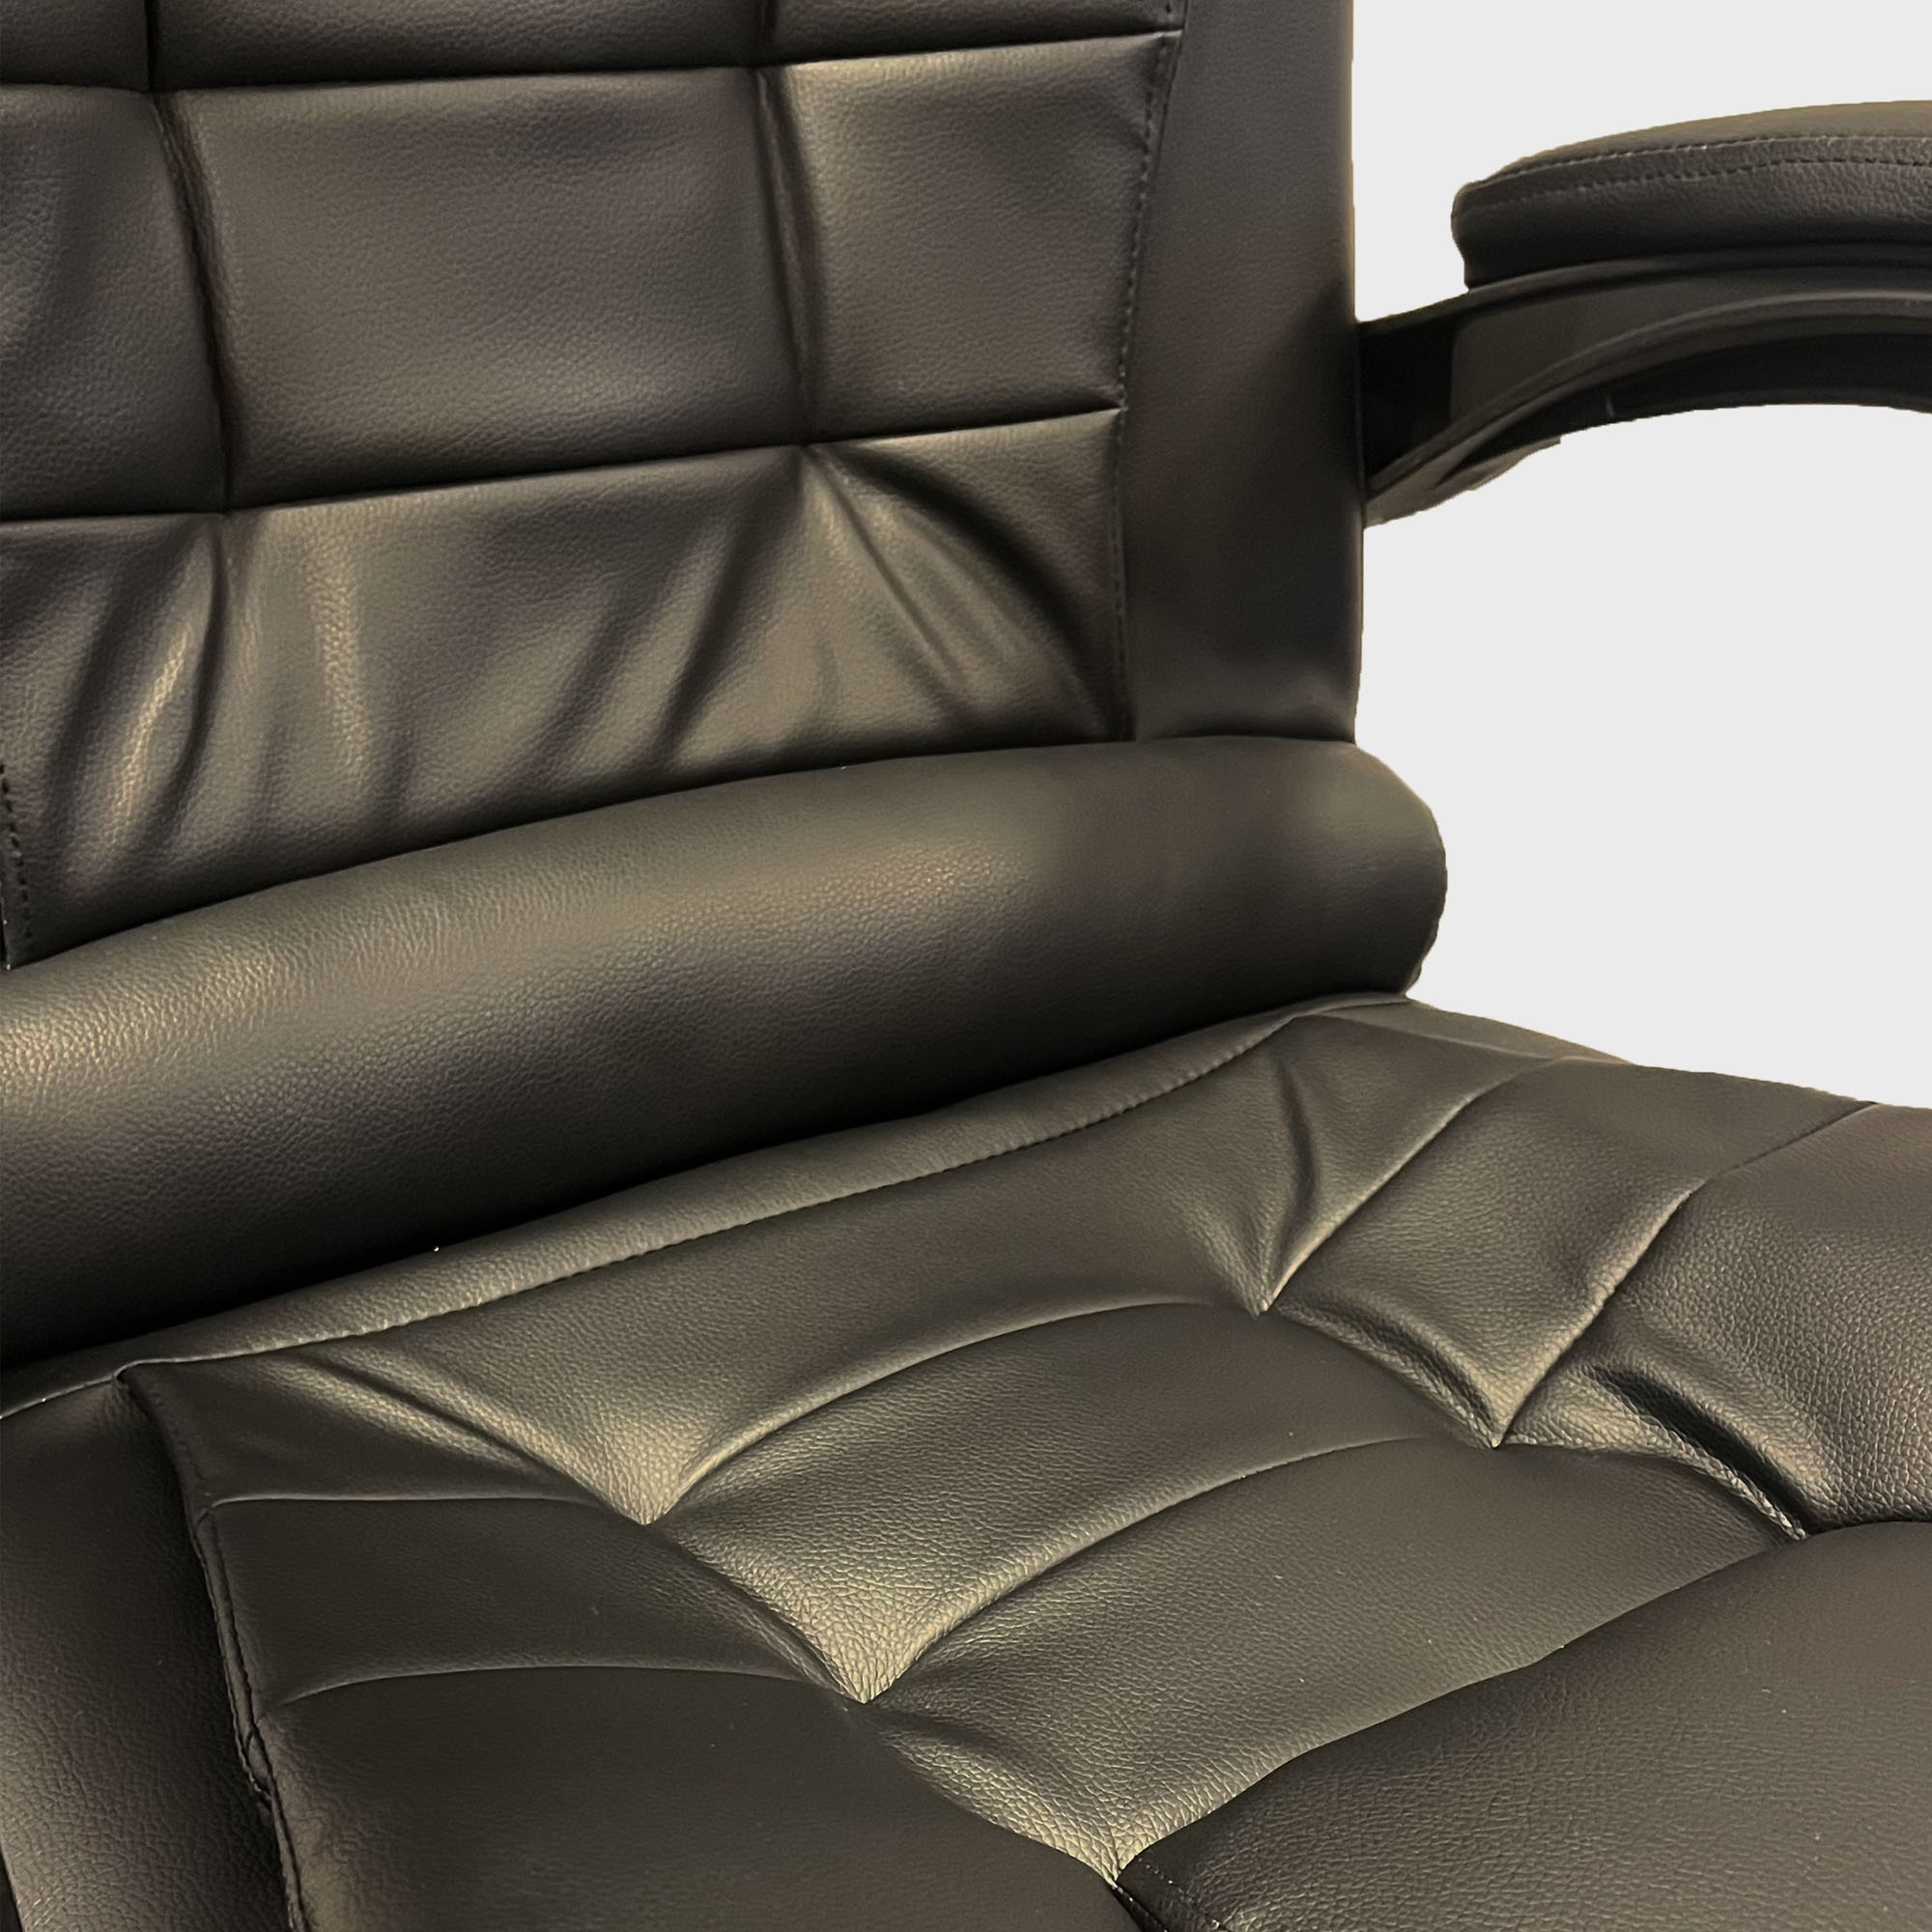 Ergodu Luxury Office Chair with Adjustable Backrest seat